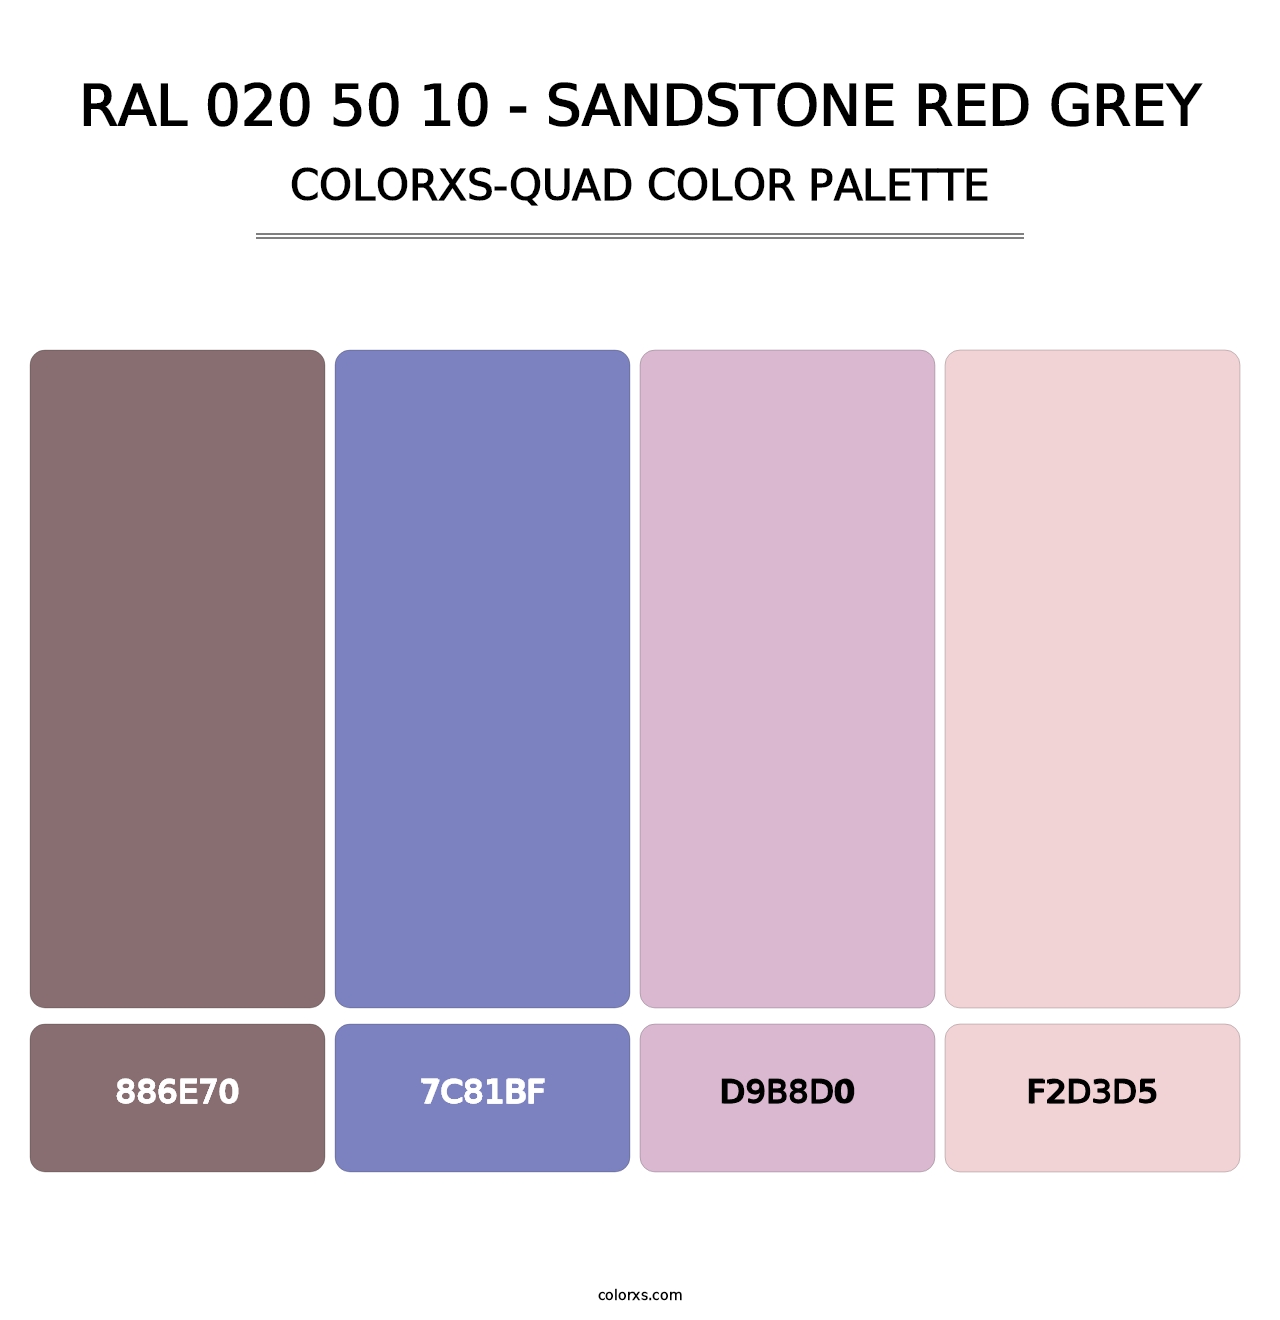 RAL 020 50 10 - Sandstone Red Grey - Colorxs Quad Palette